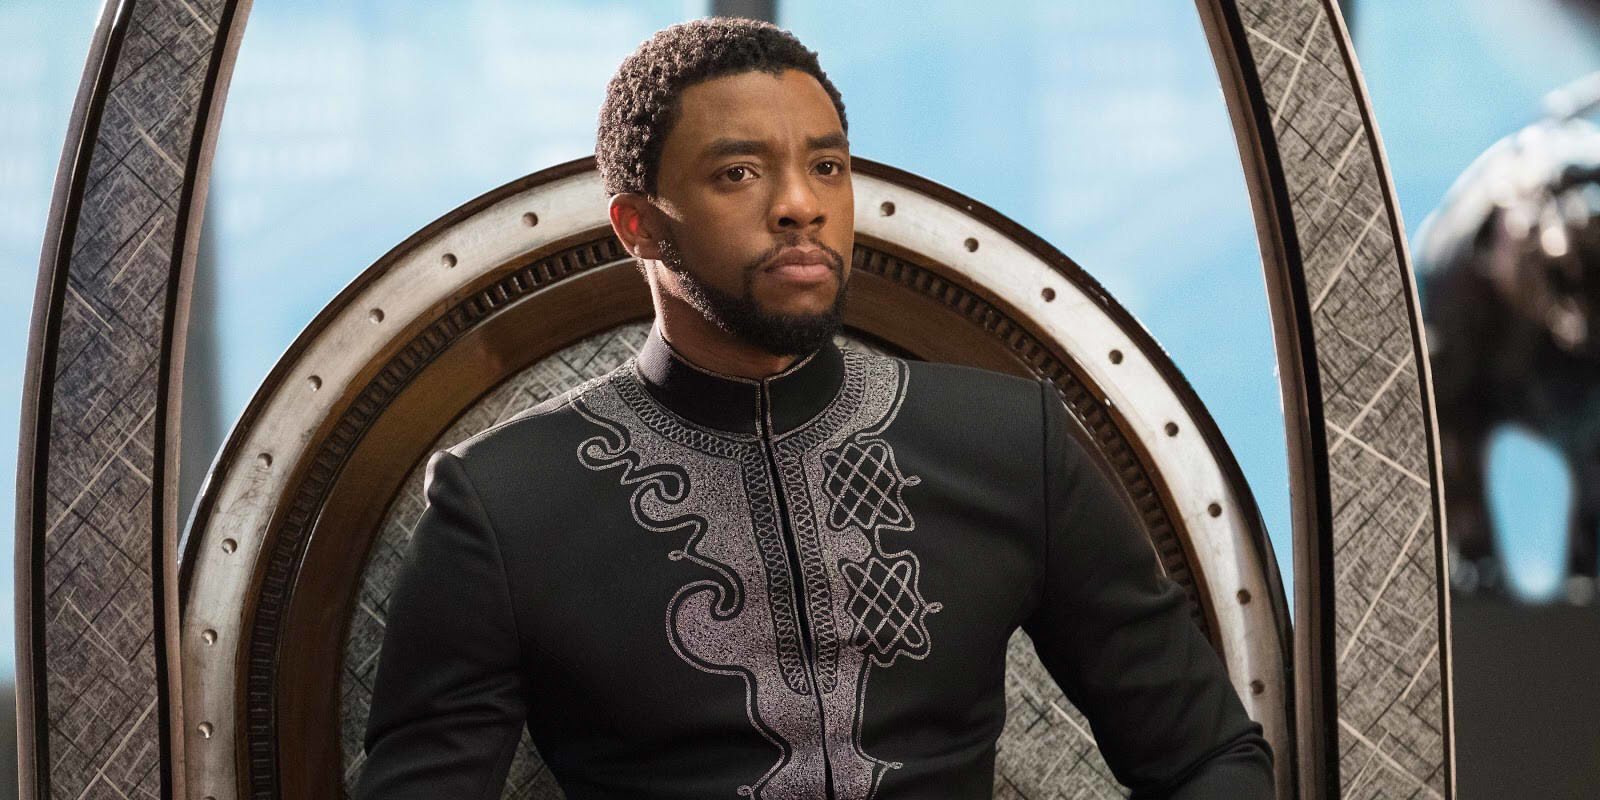 'Black Panther' ha sido "un experimento cruel", según Sean "Diddy" Combs